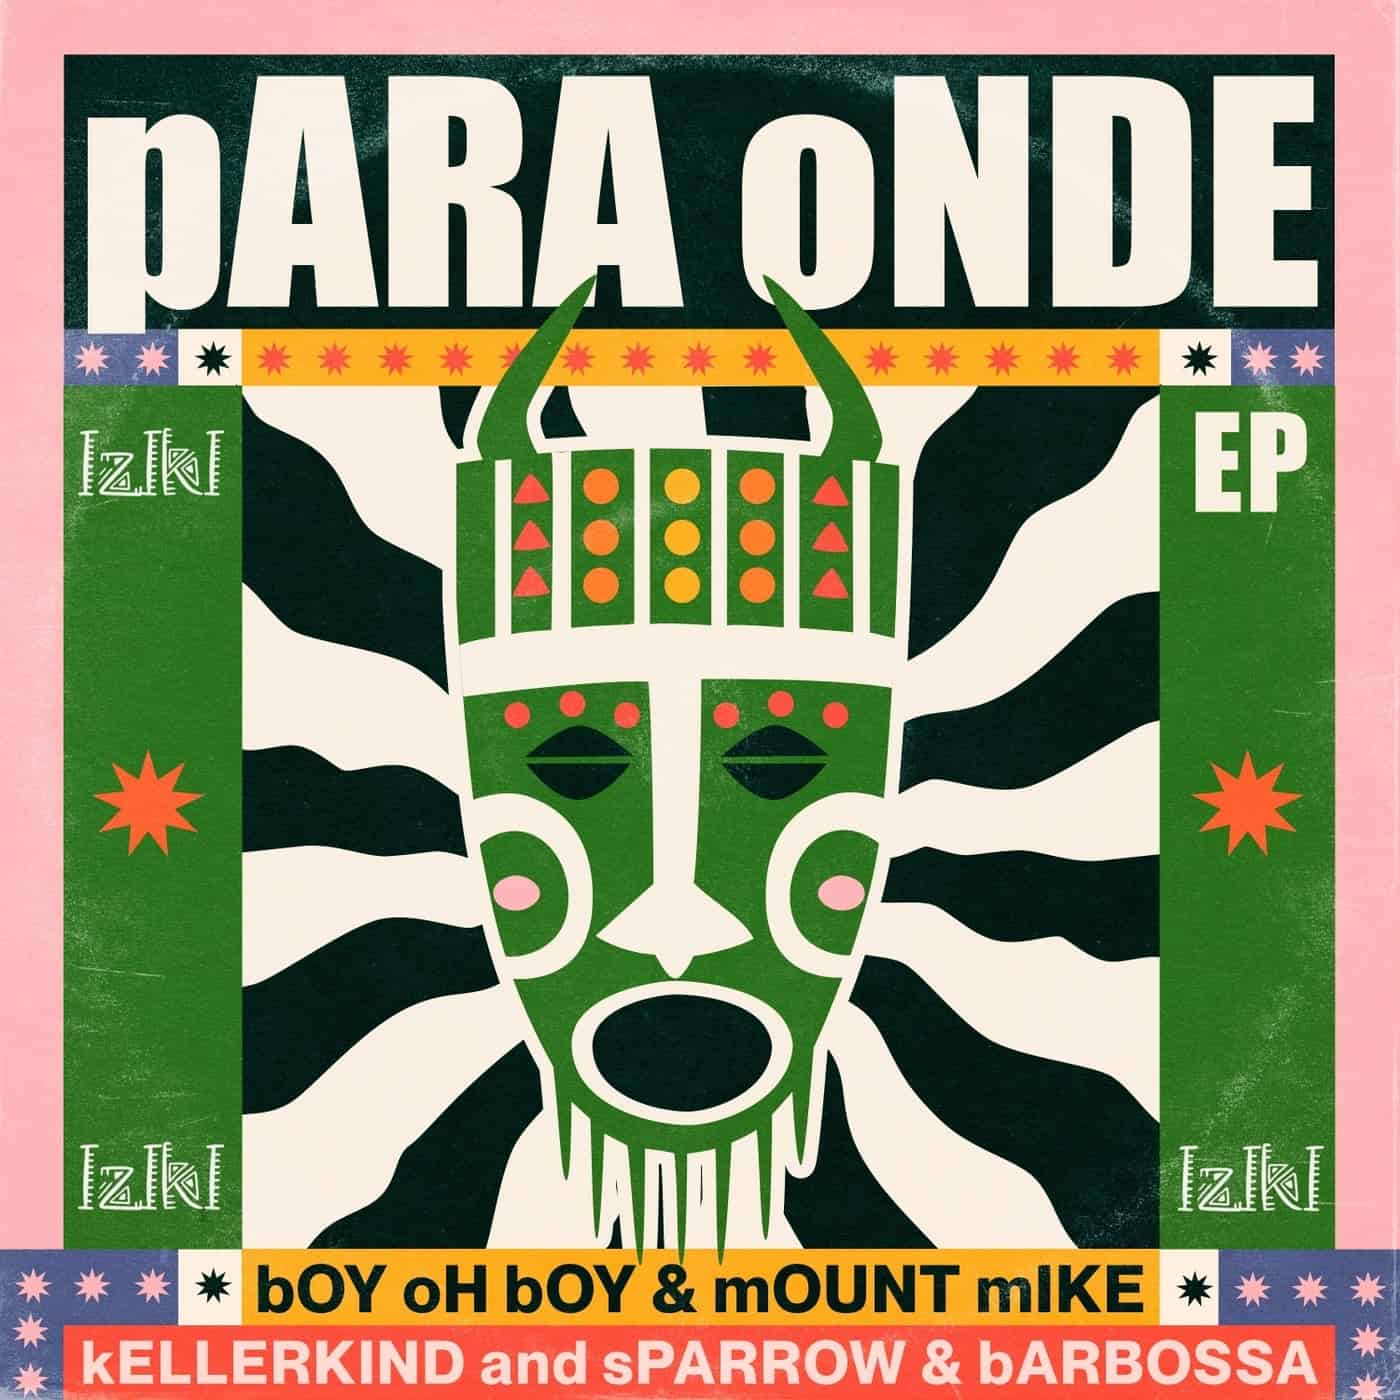 Download Mount Mike, Boy Oh Boy - Para Onde on Electrobuzz